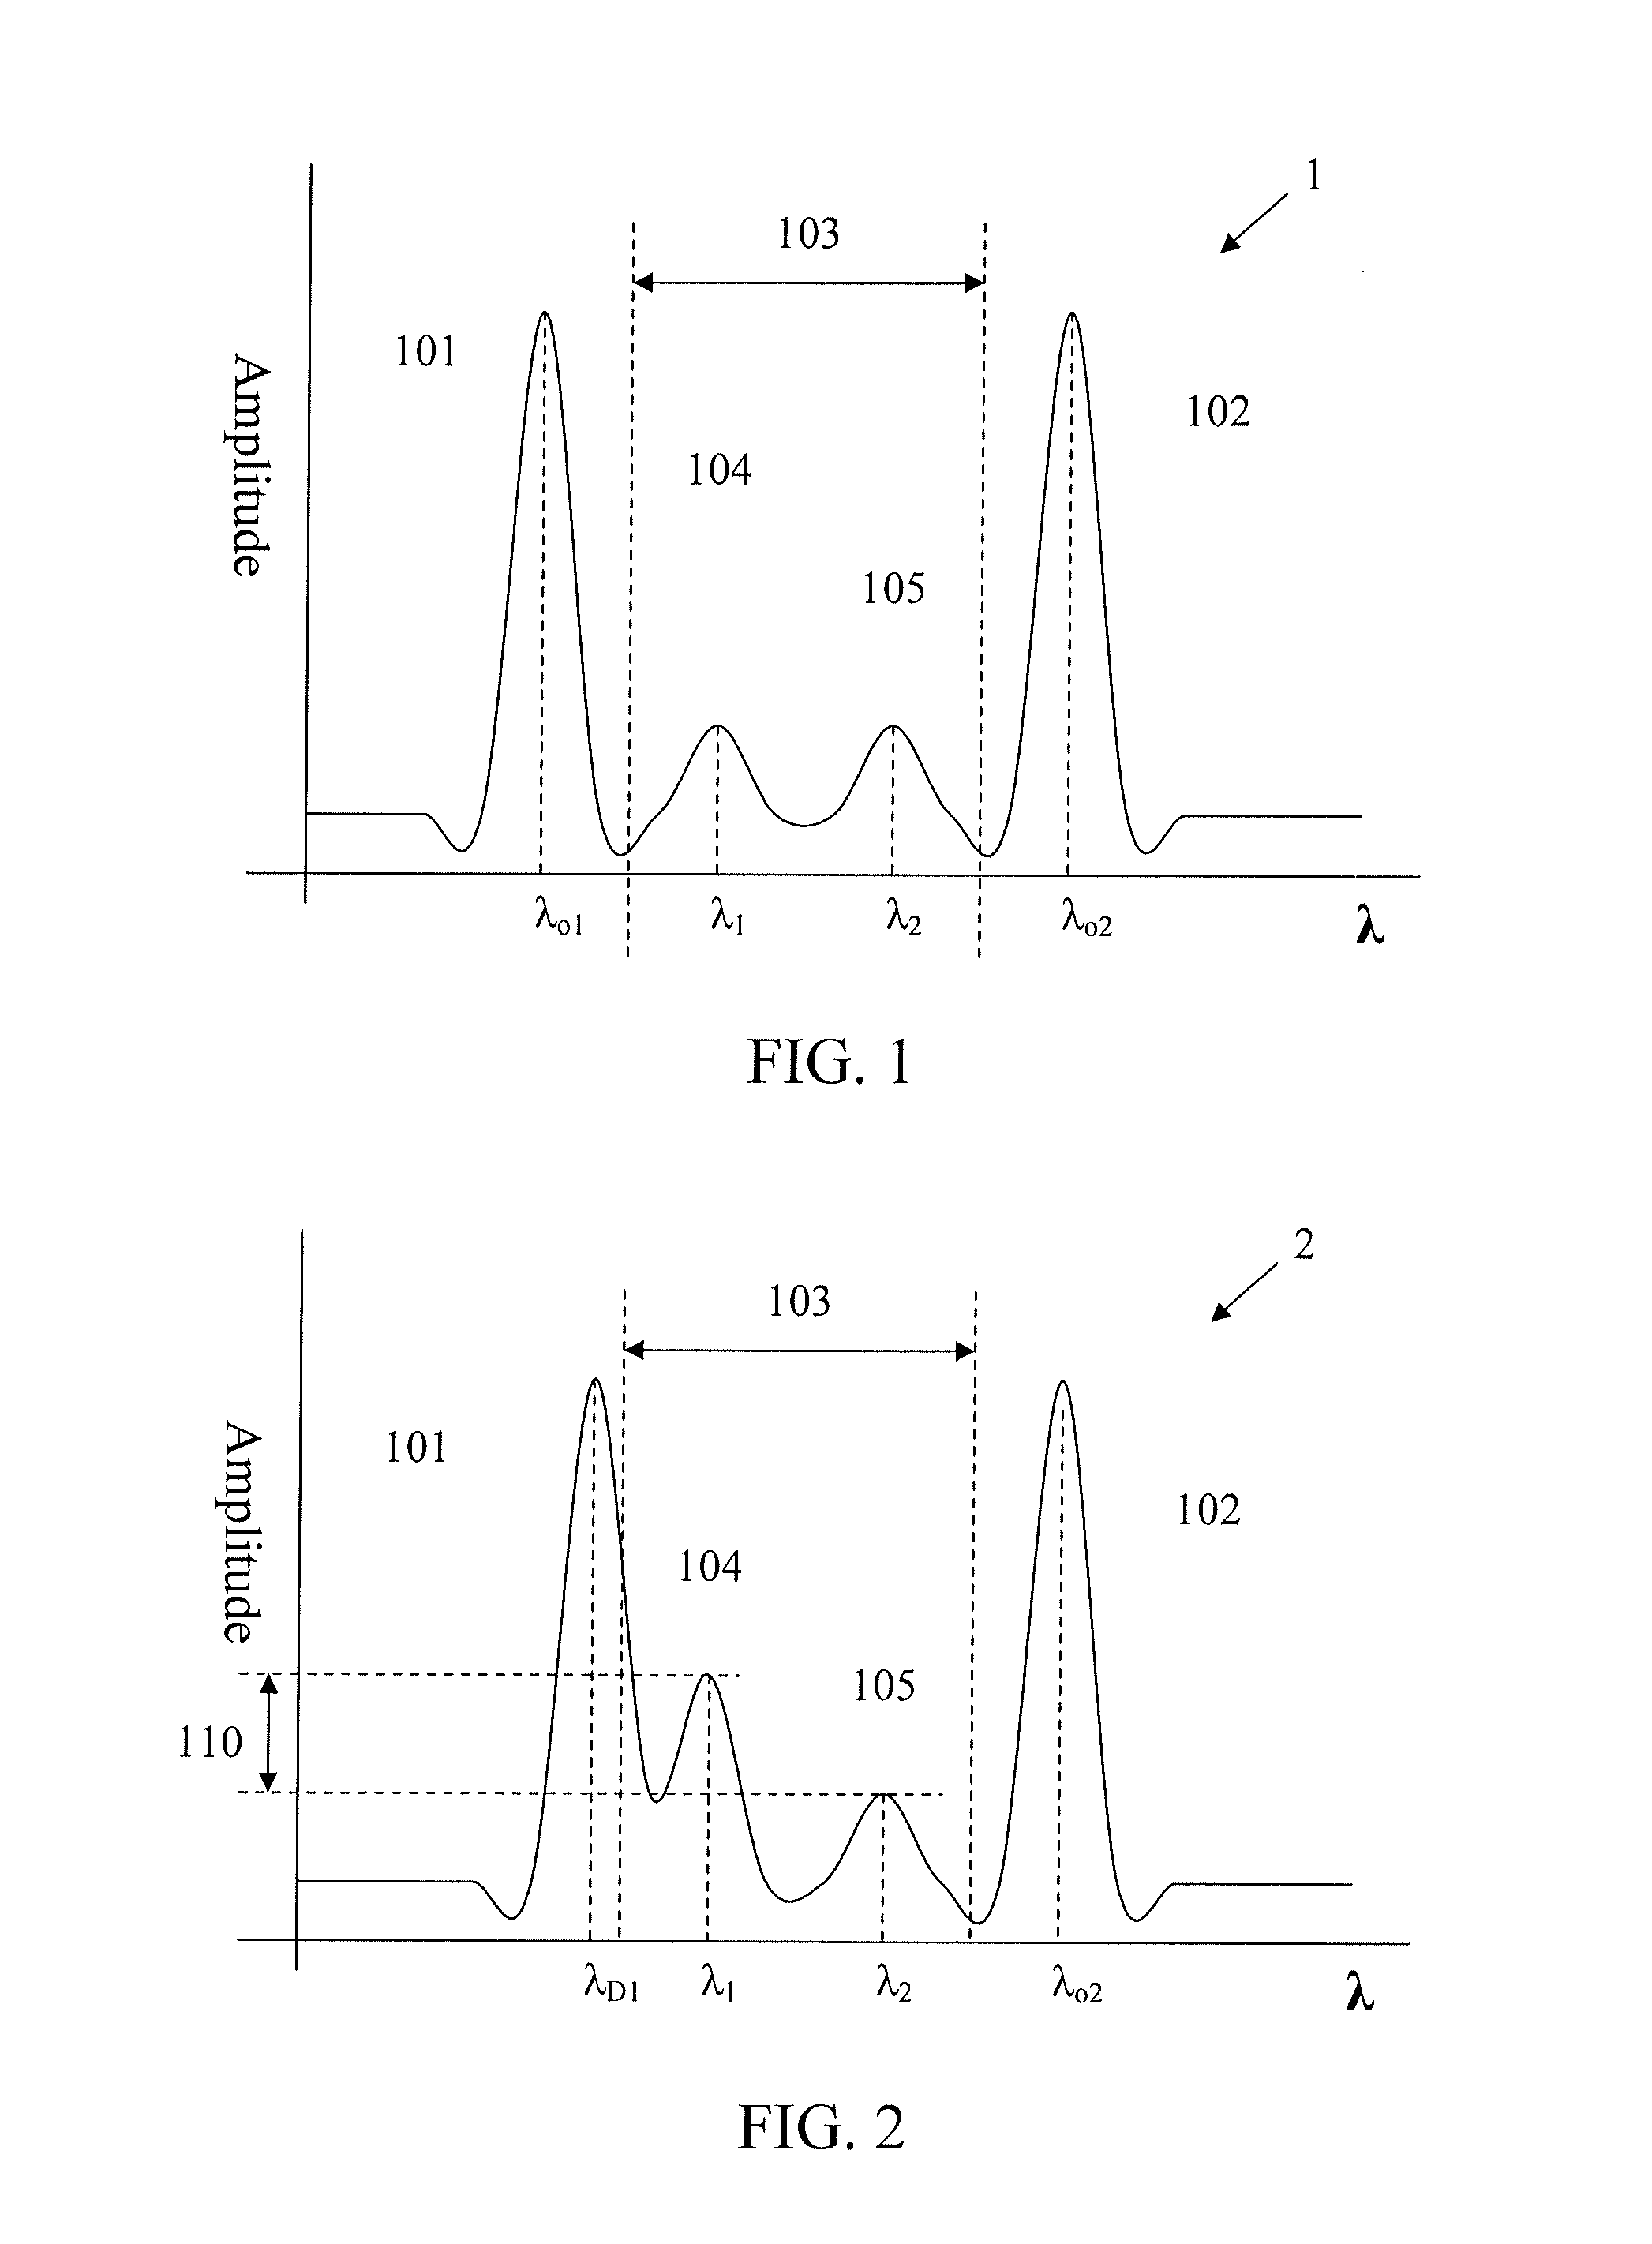 Method for monitoring wavelength-division multiplexed signal